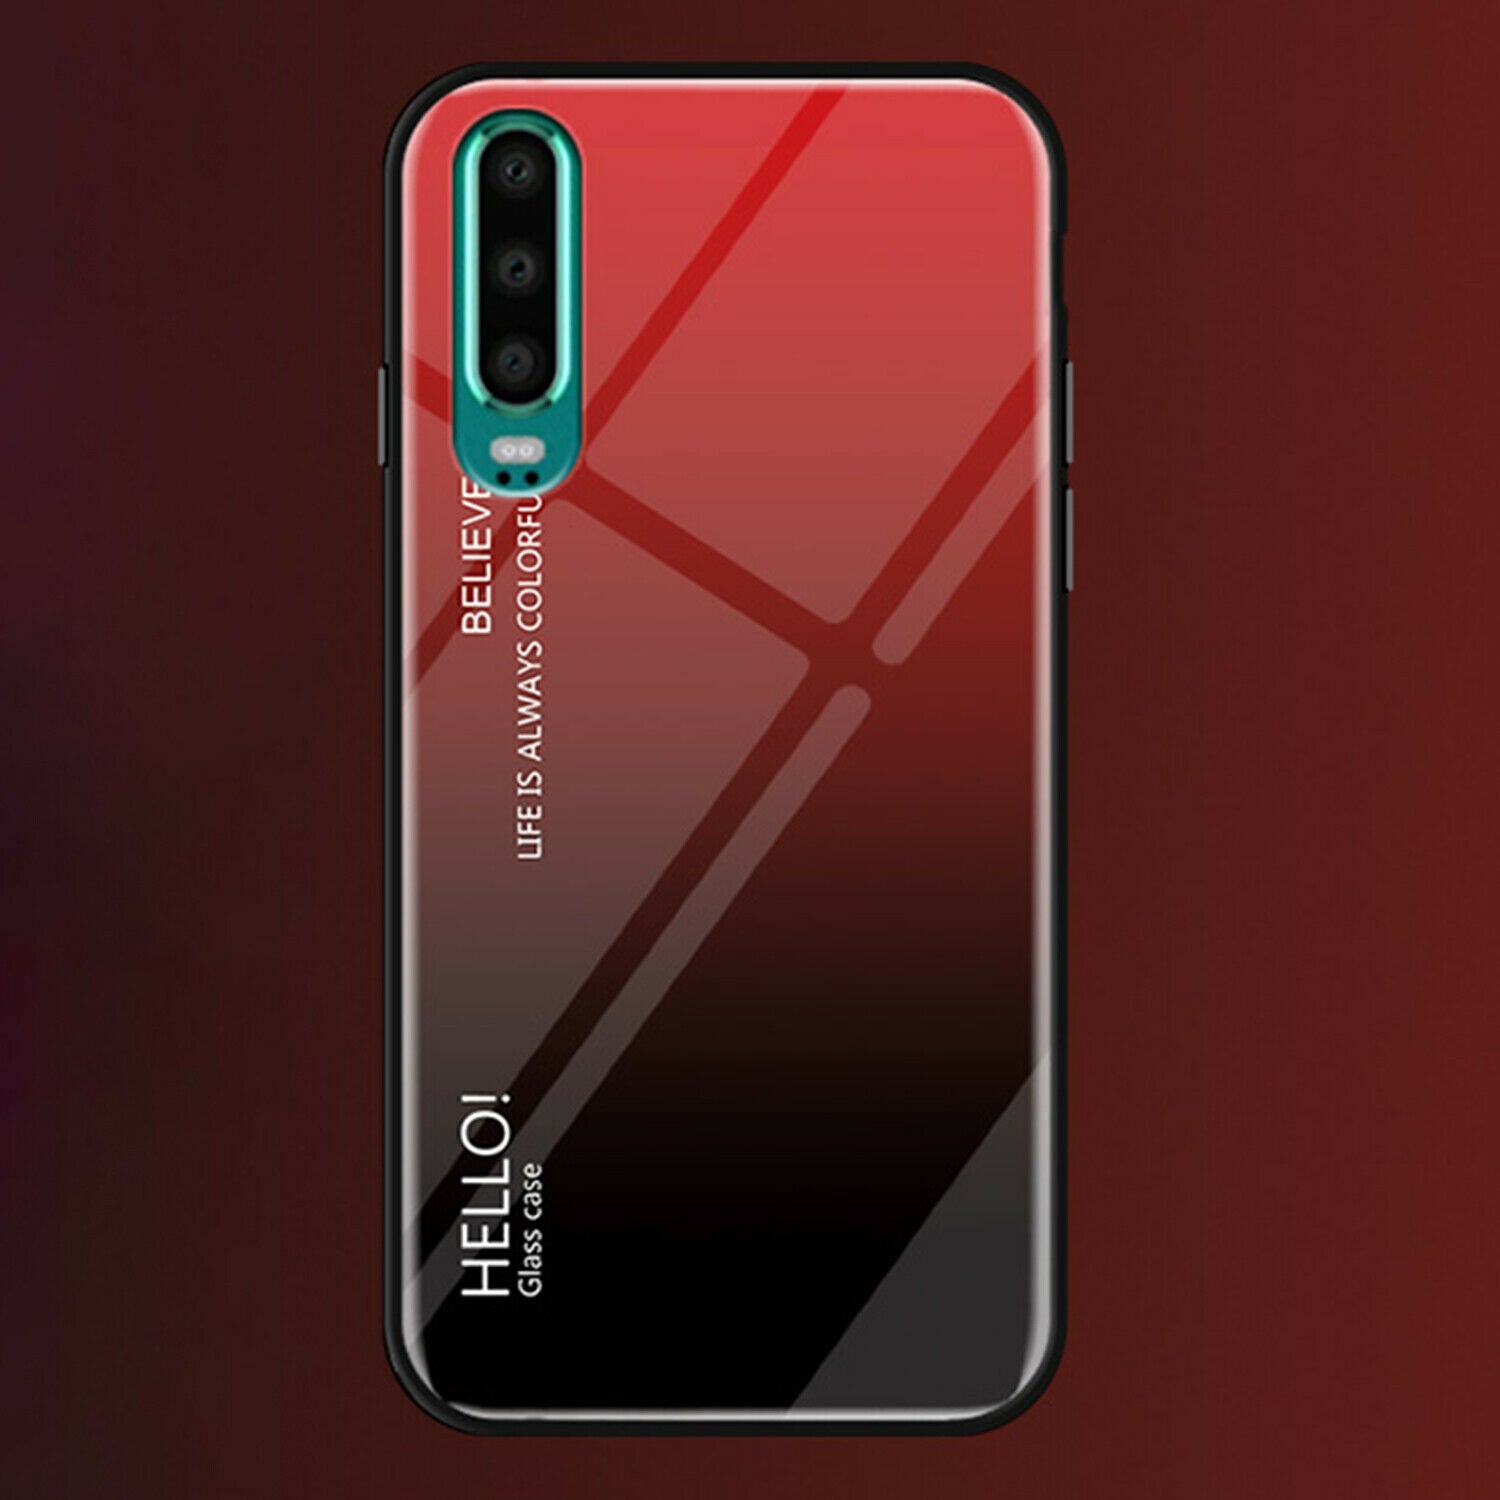 For Huawei Nova 3e Case Shockproof Tempered Glass Bumper Slim Cover-Red